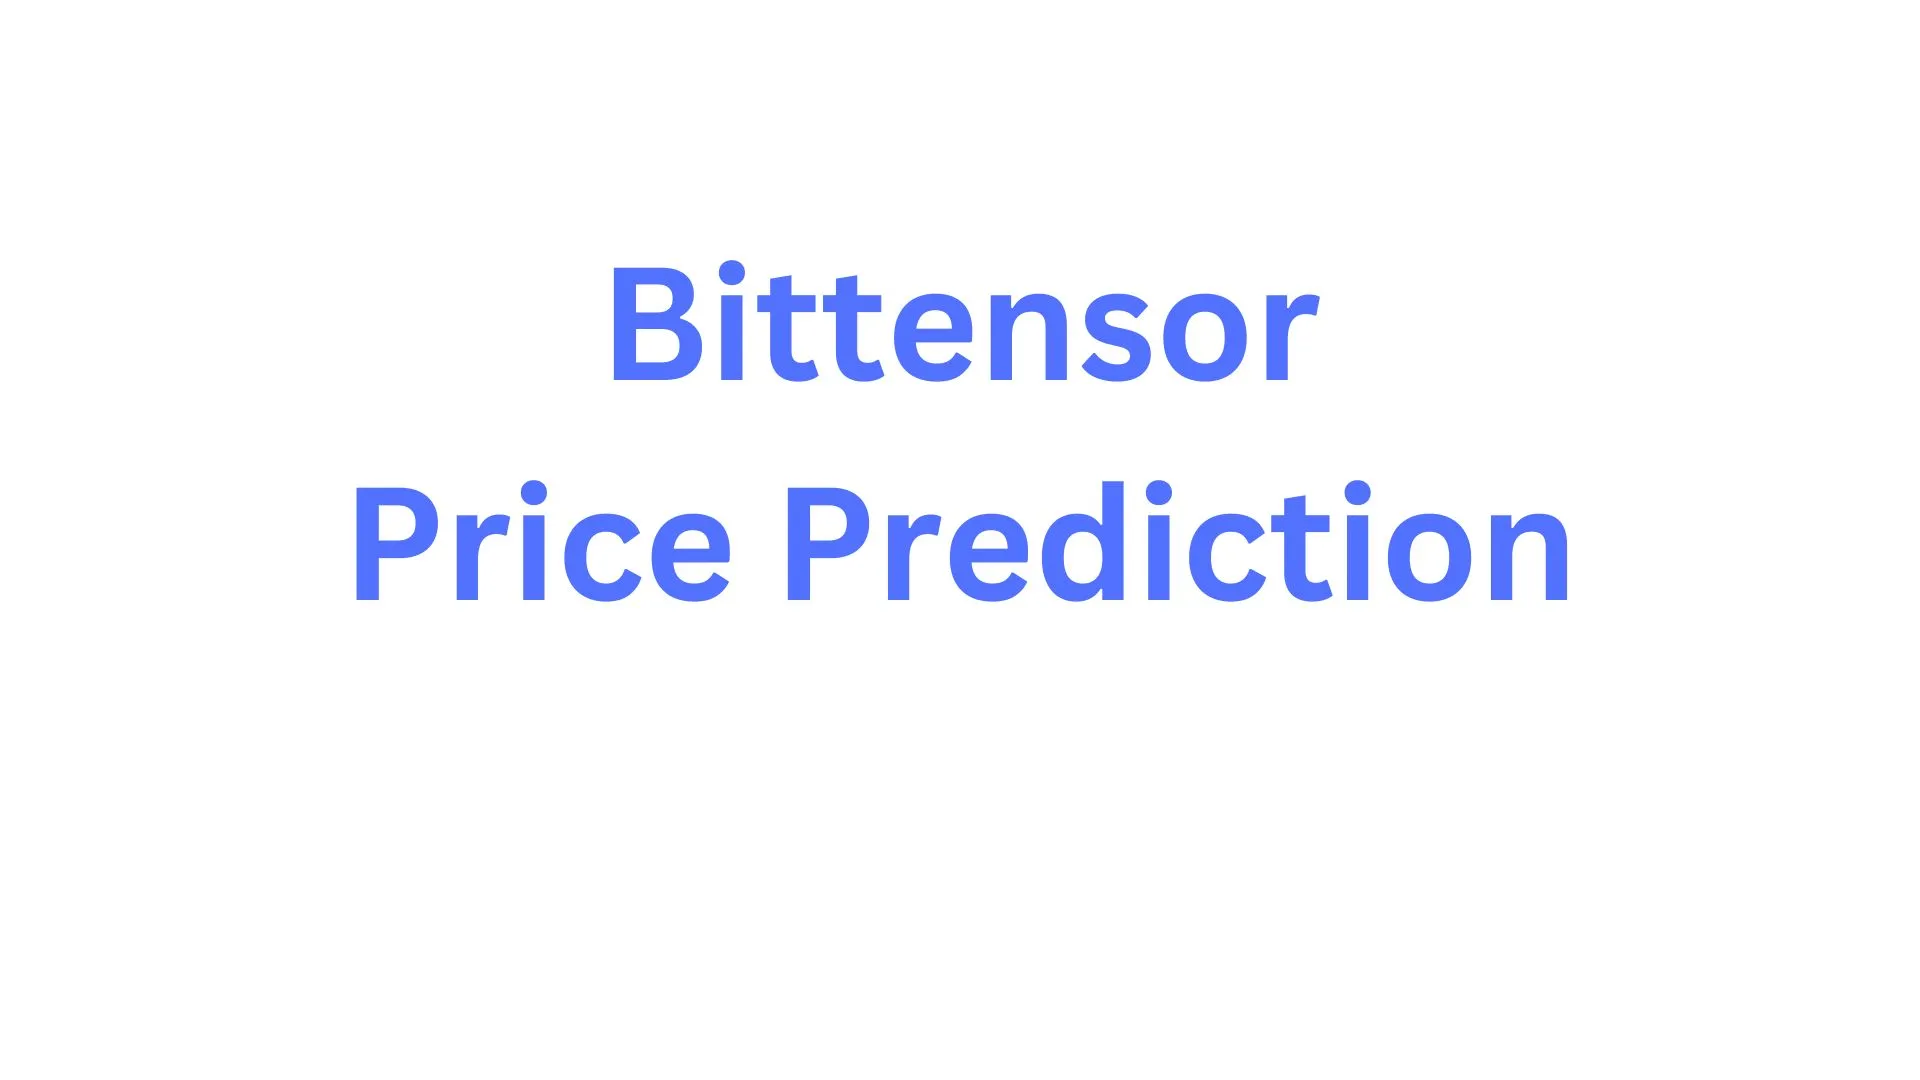 Bittensor Price Prediction